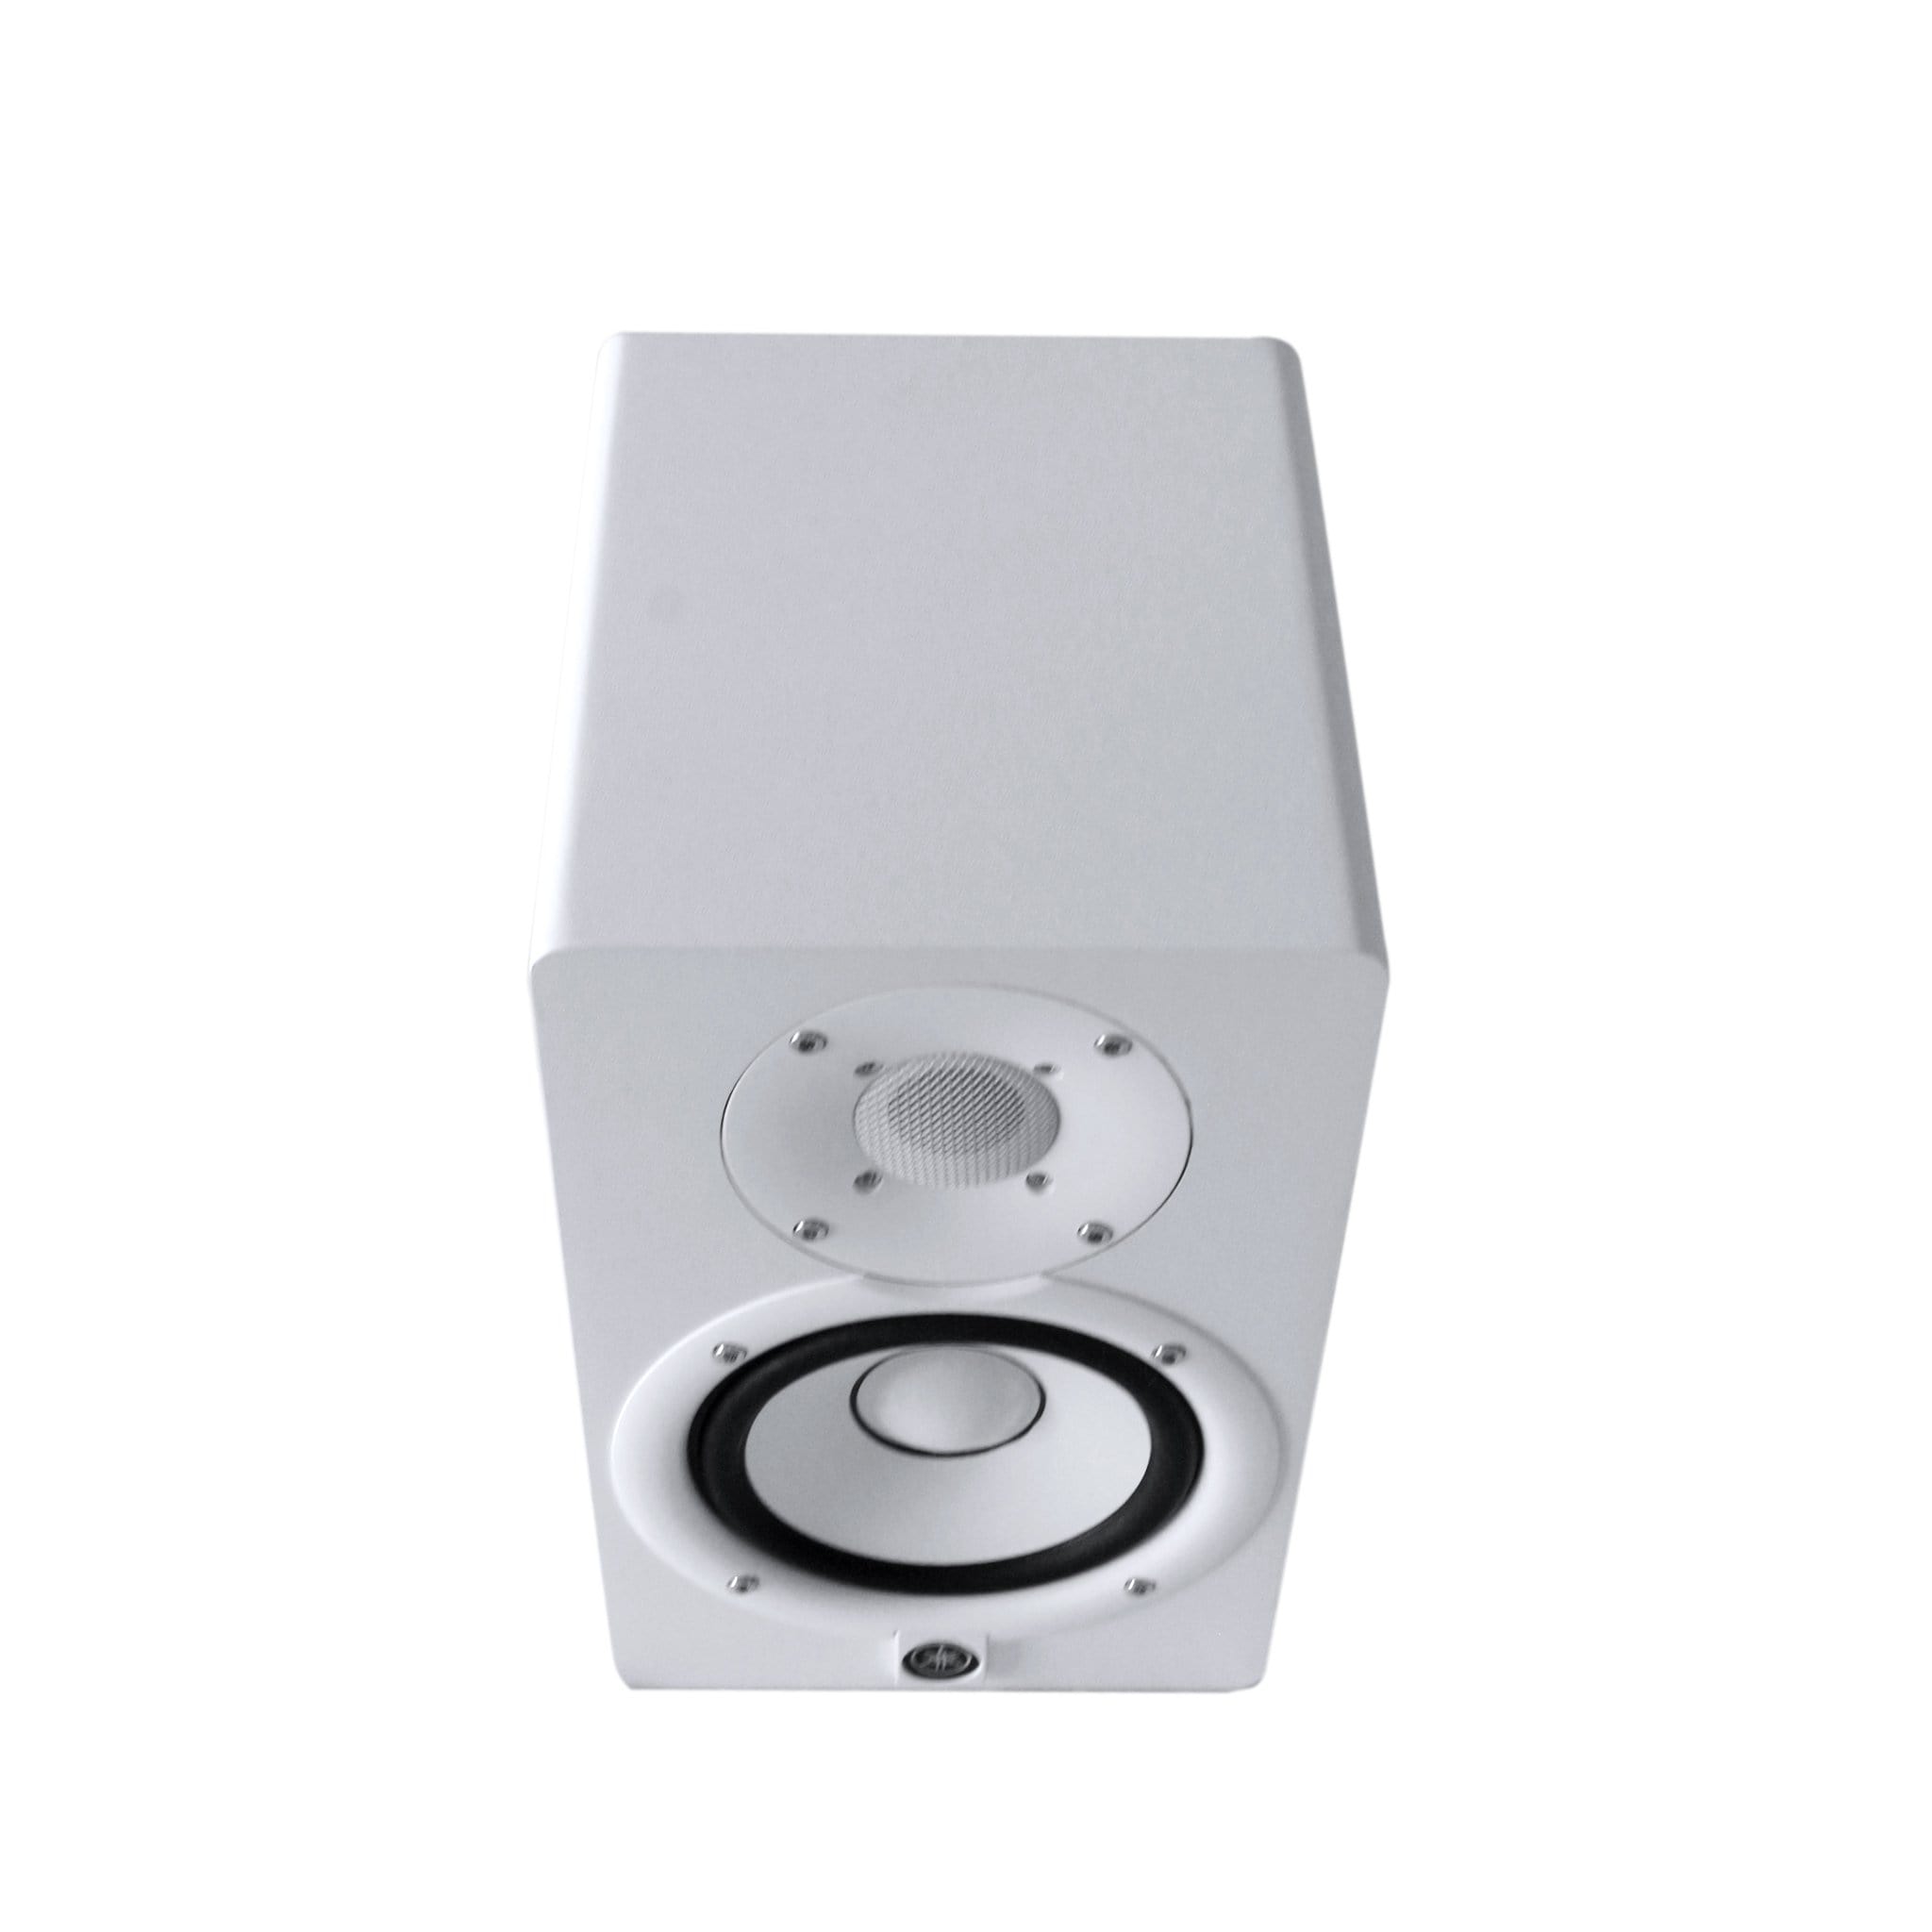 Studio Monitor Speaker Review: Yamaha HS5 